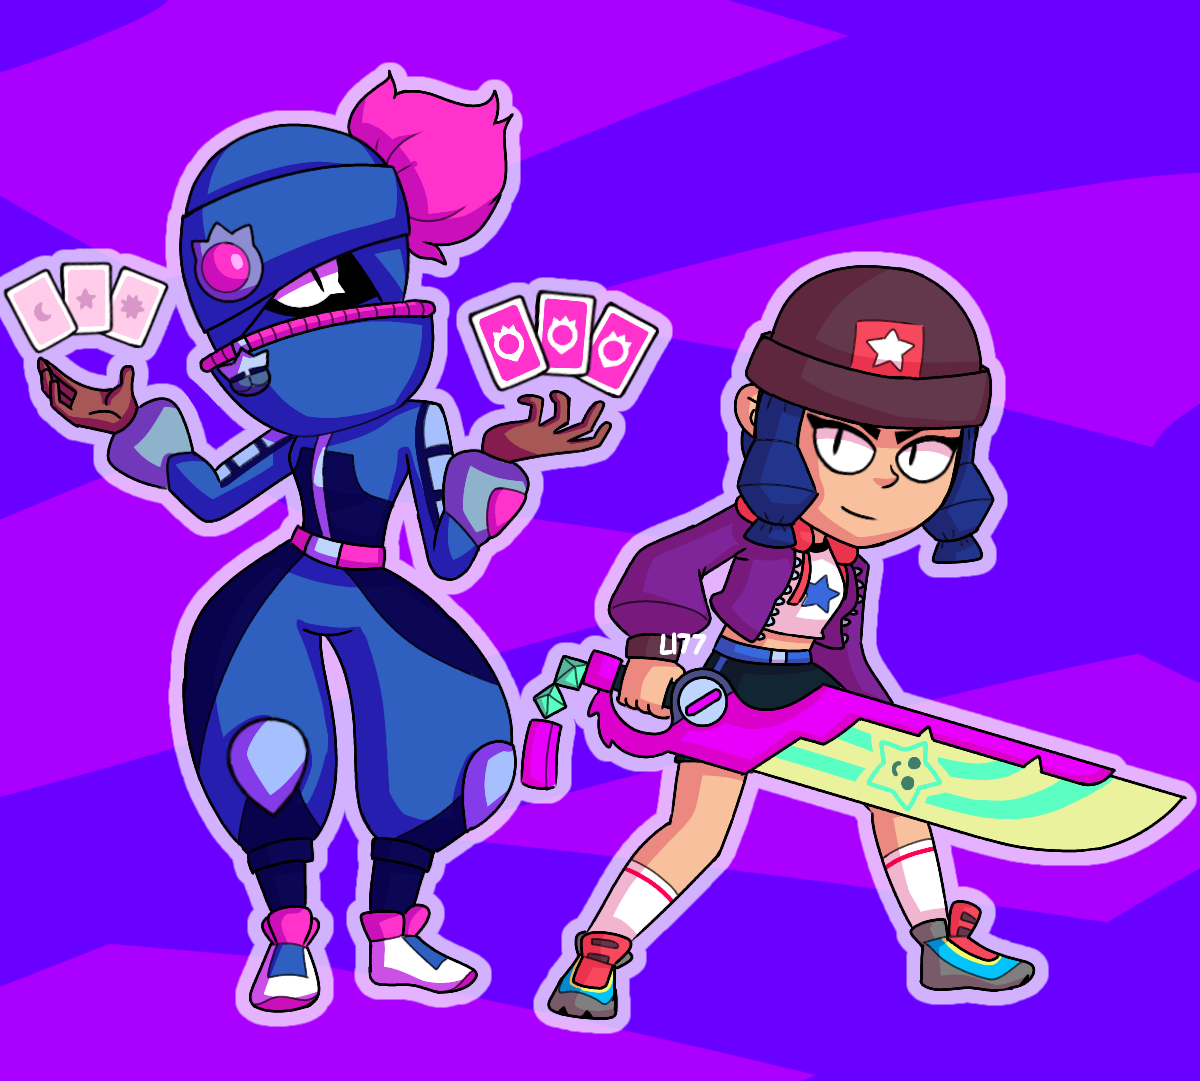 Street ninja Tara and Heroine Bibi